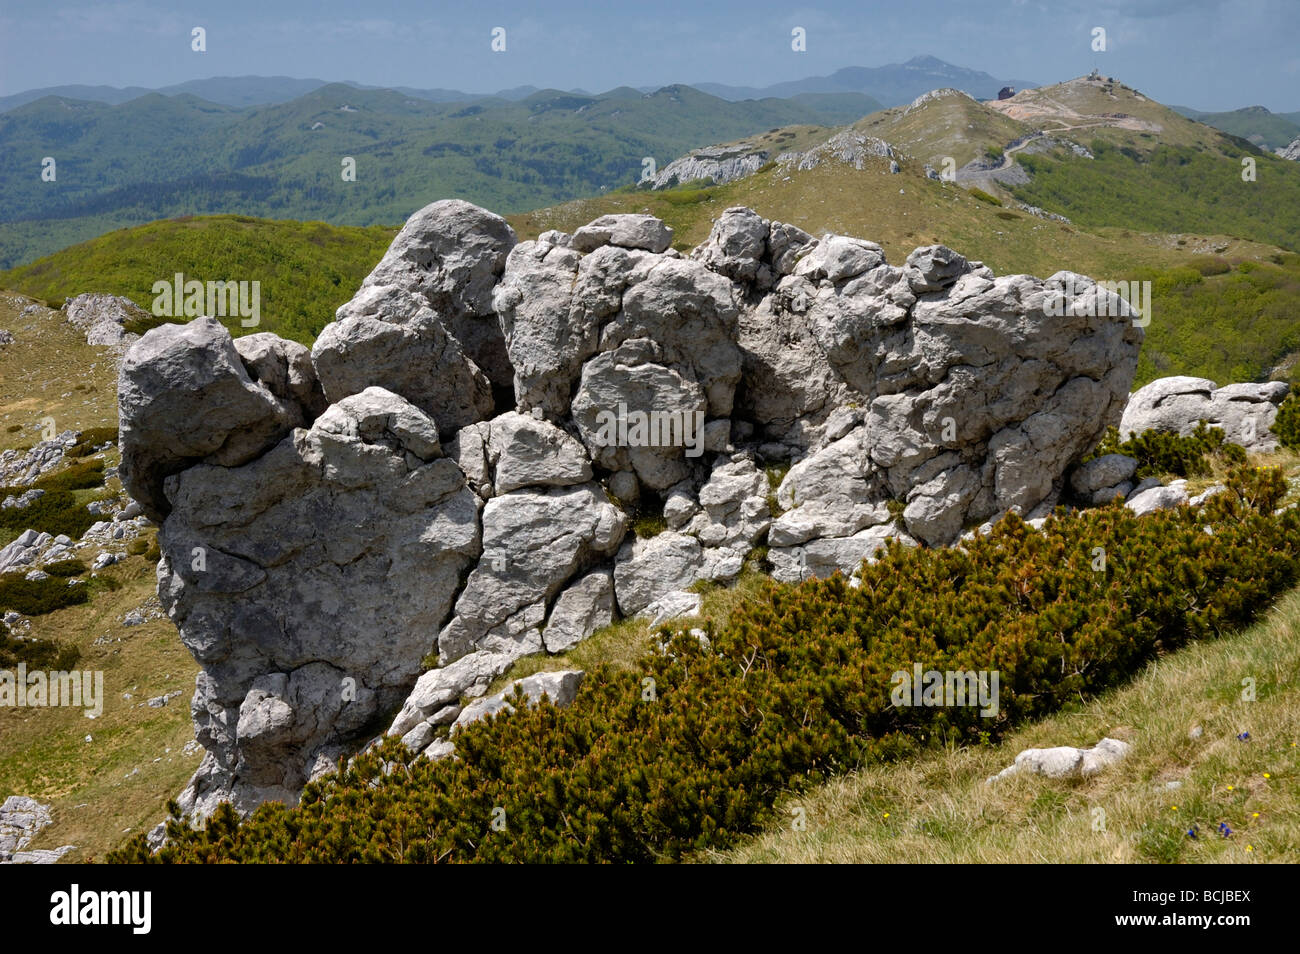 Cracked stone and mountain pine, mountain Guslica in the background, mountain scene in Gorski kotar, Croatia, Europe Stock Photo